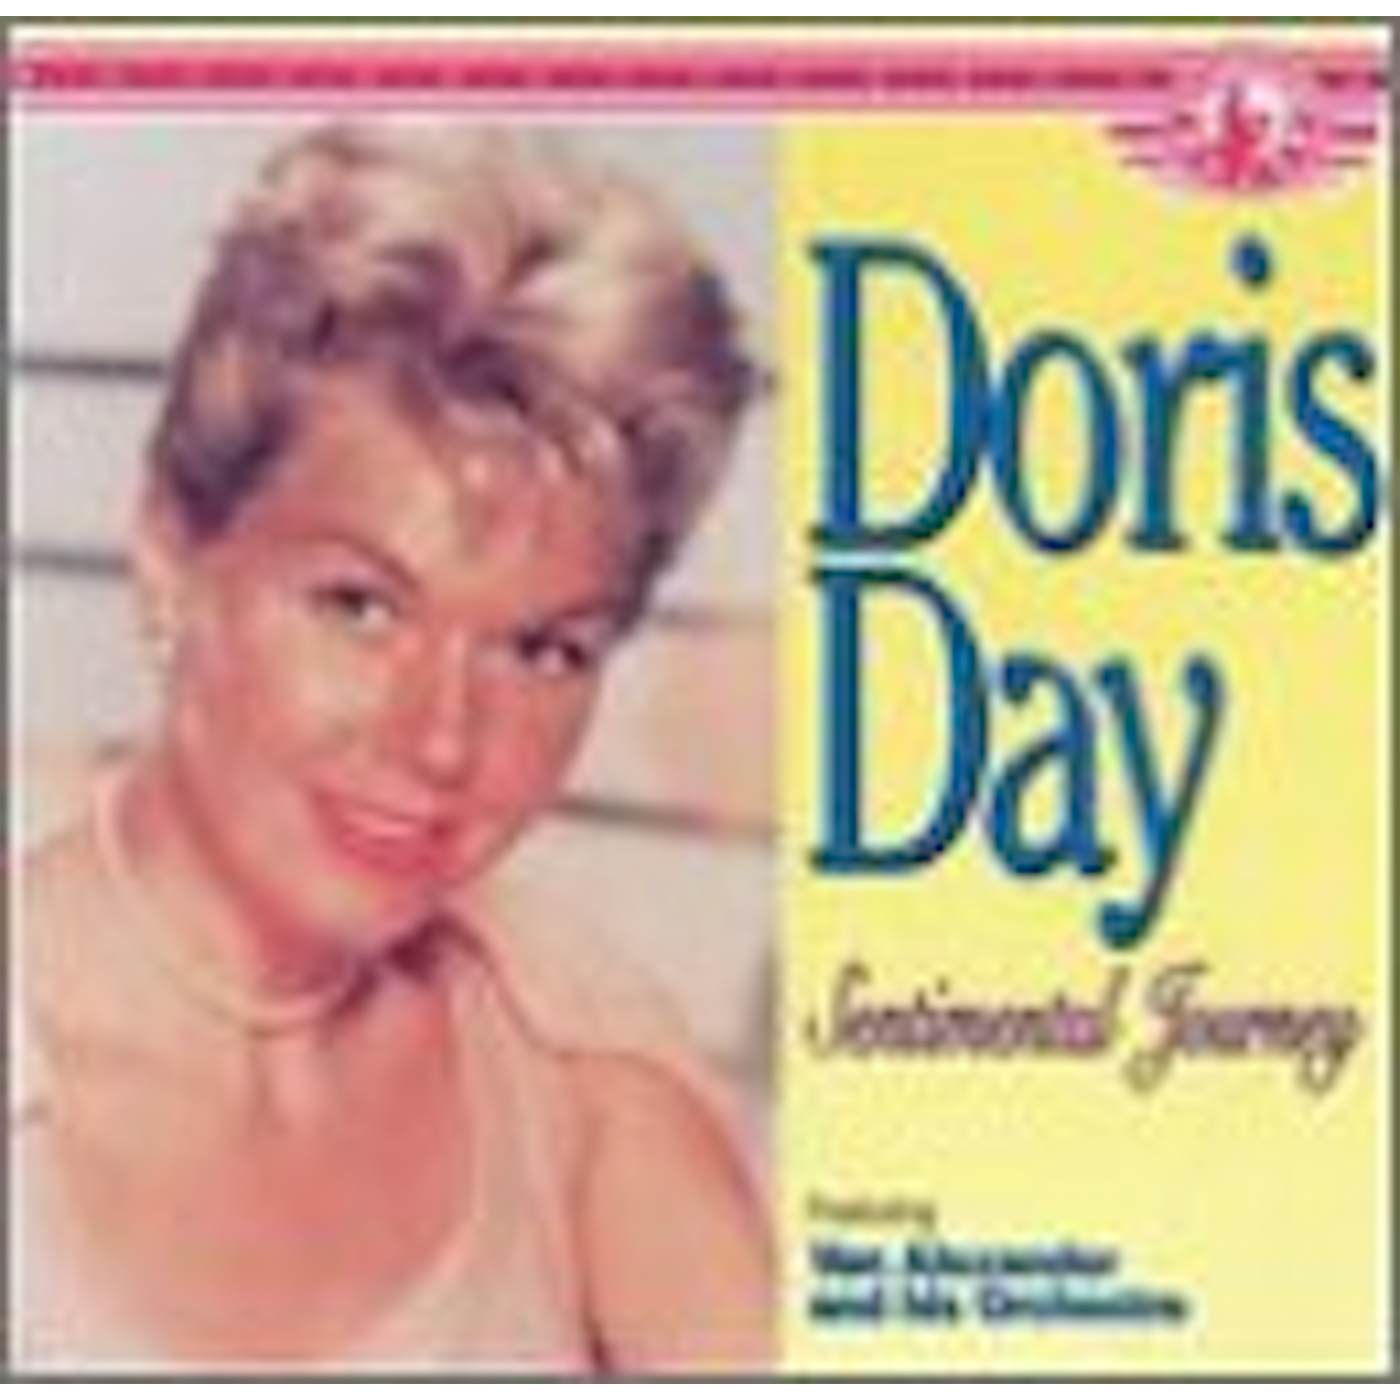 Doris Day 1953 CD